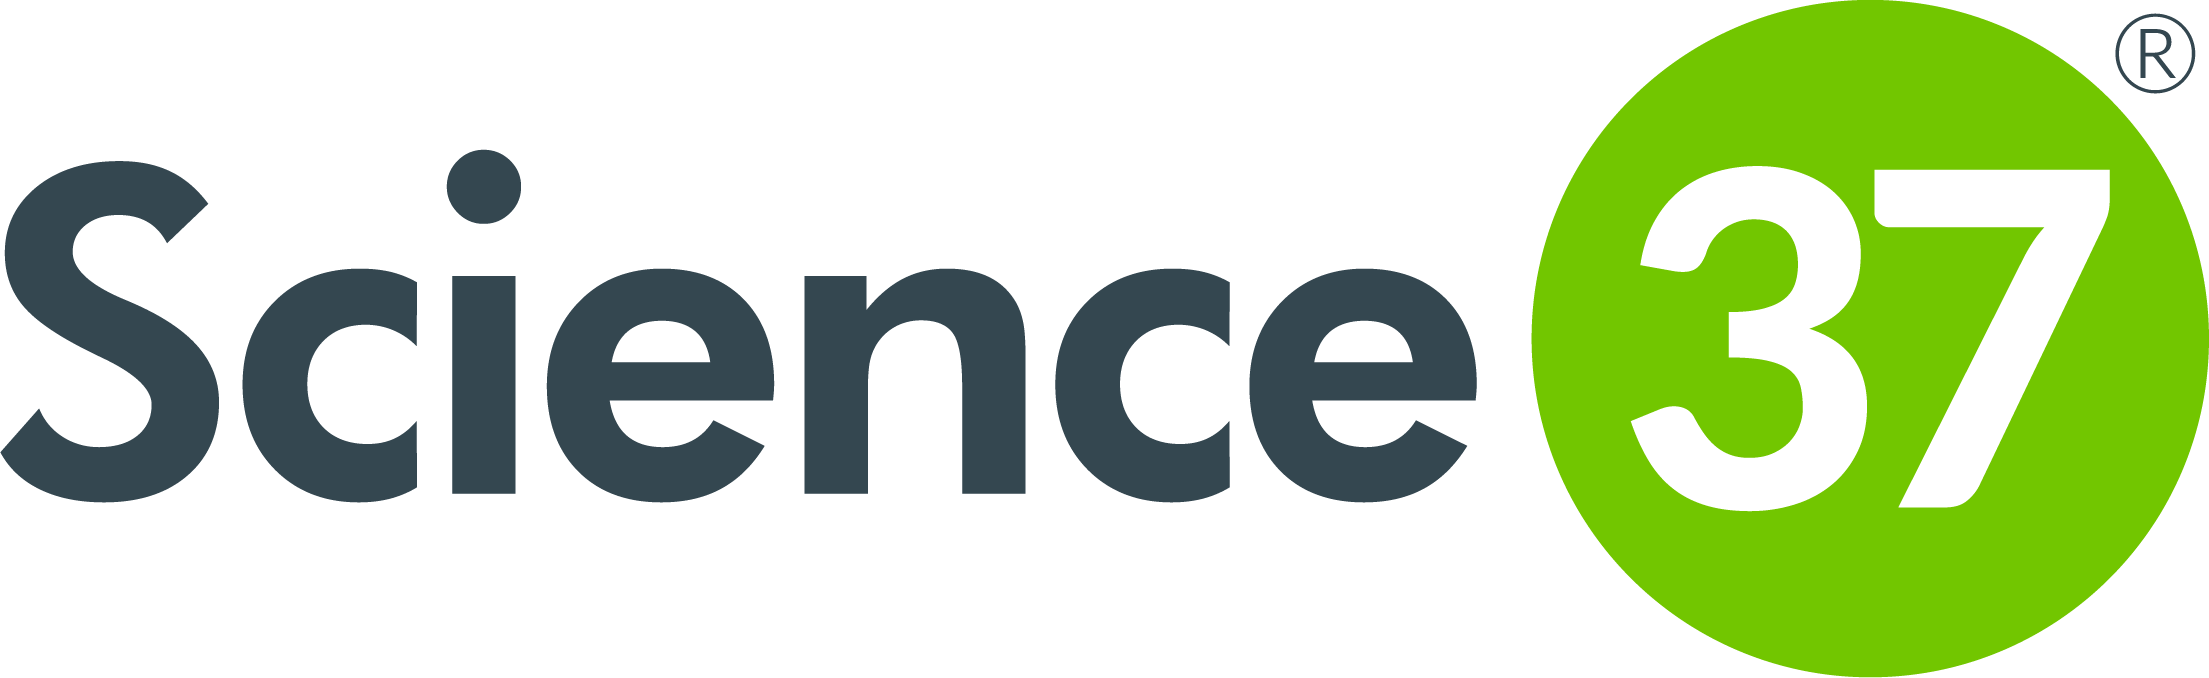  Science 37 logo